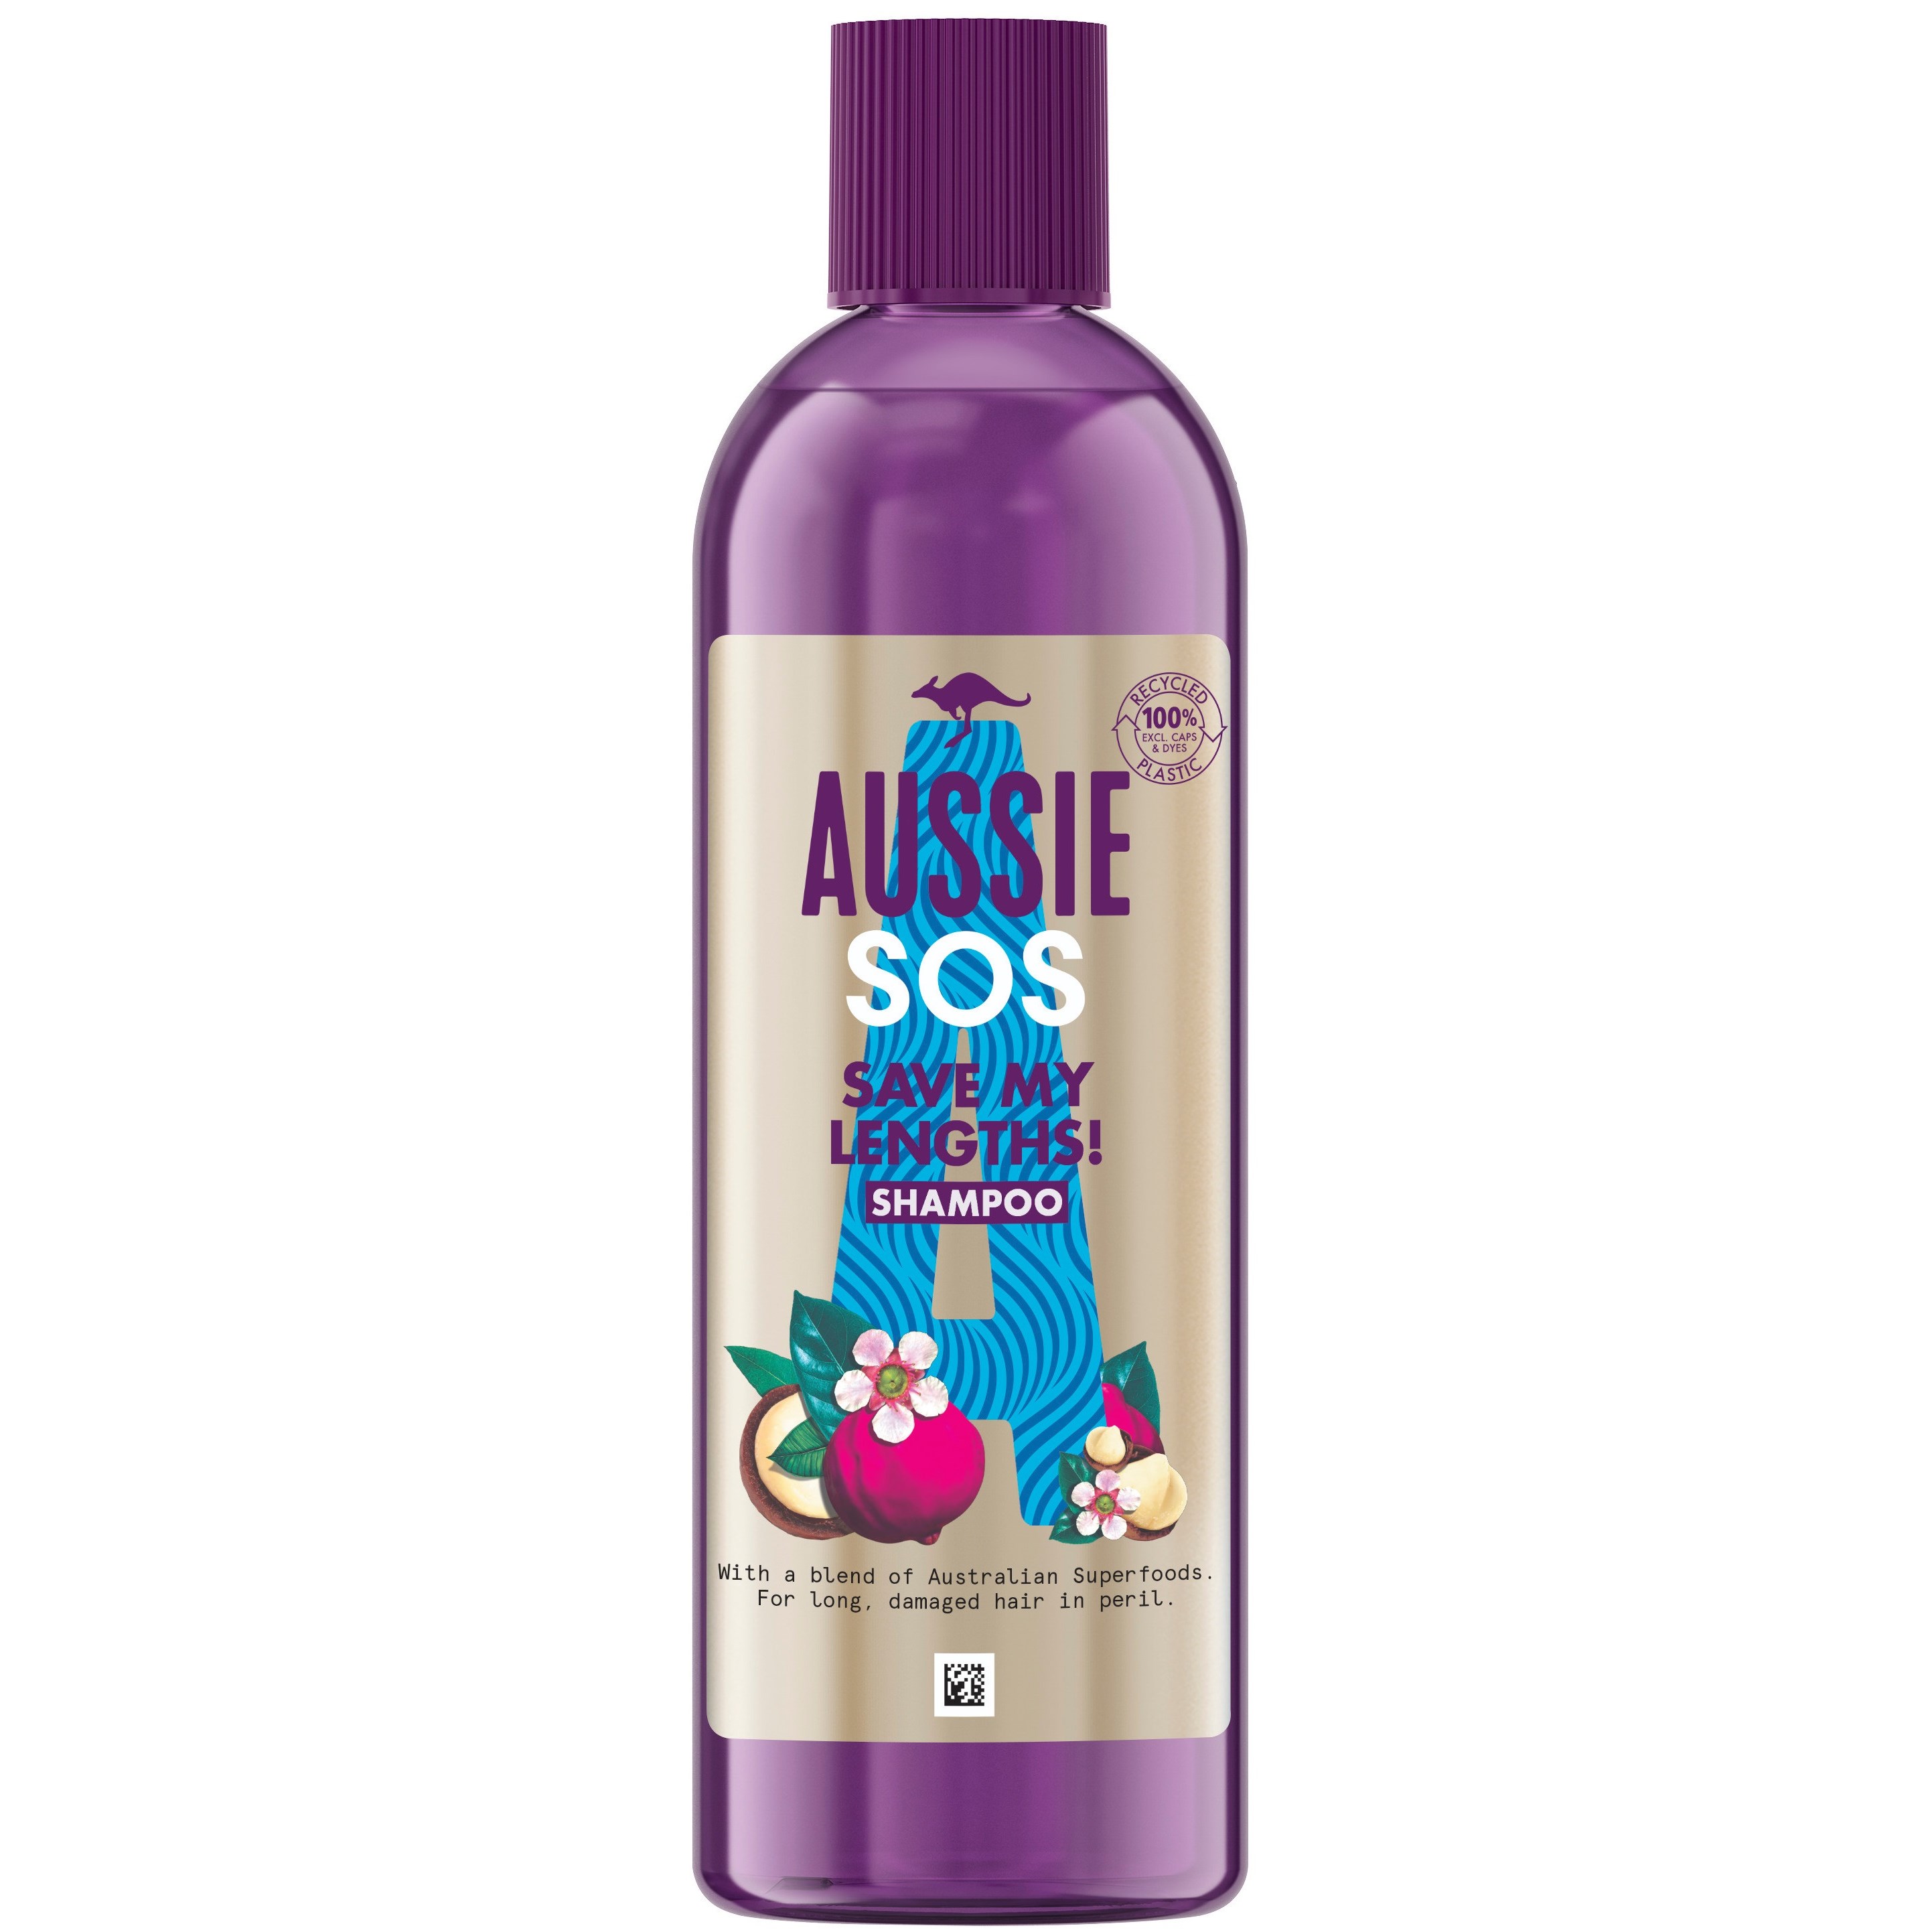 Bilde av Aussie Sos Save My Lengths! Shampoo 290 Ml